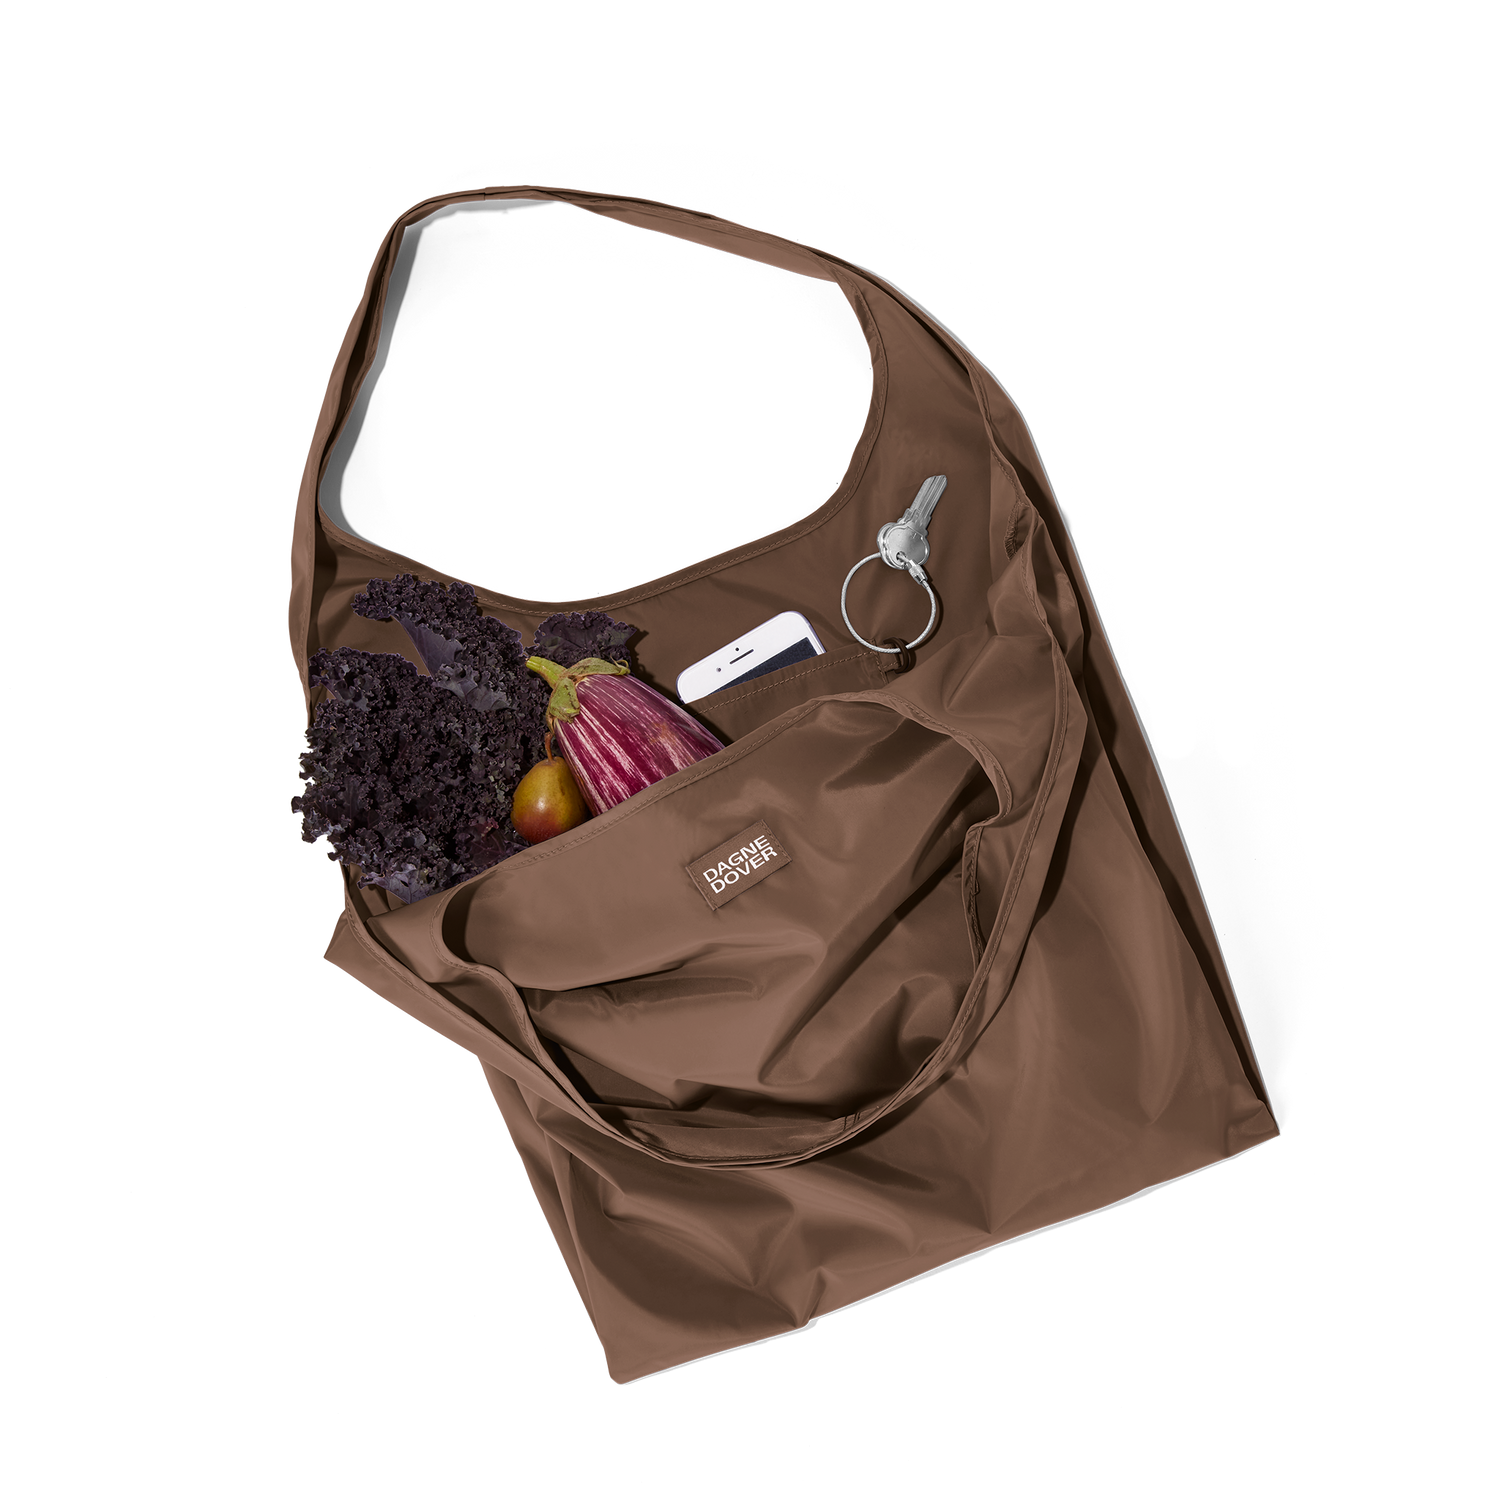 47 Hottest Purple Bags   Purple bags, Fashion bags, Bags